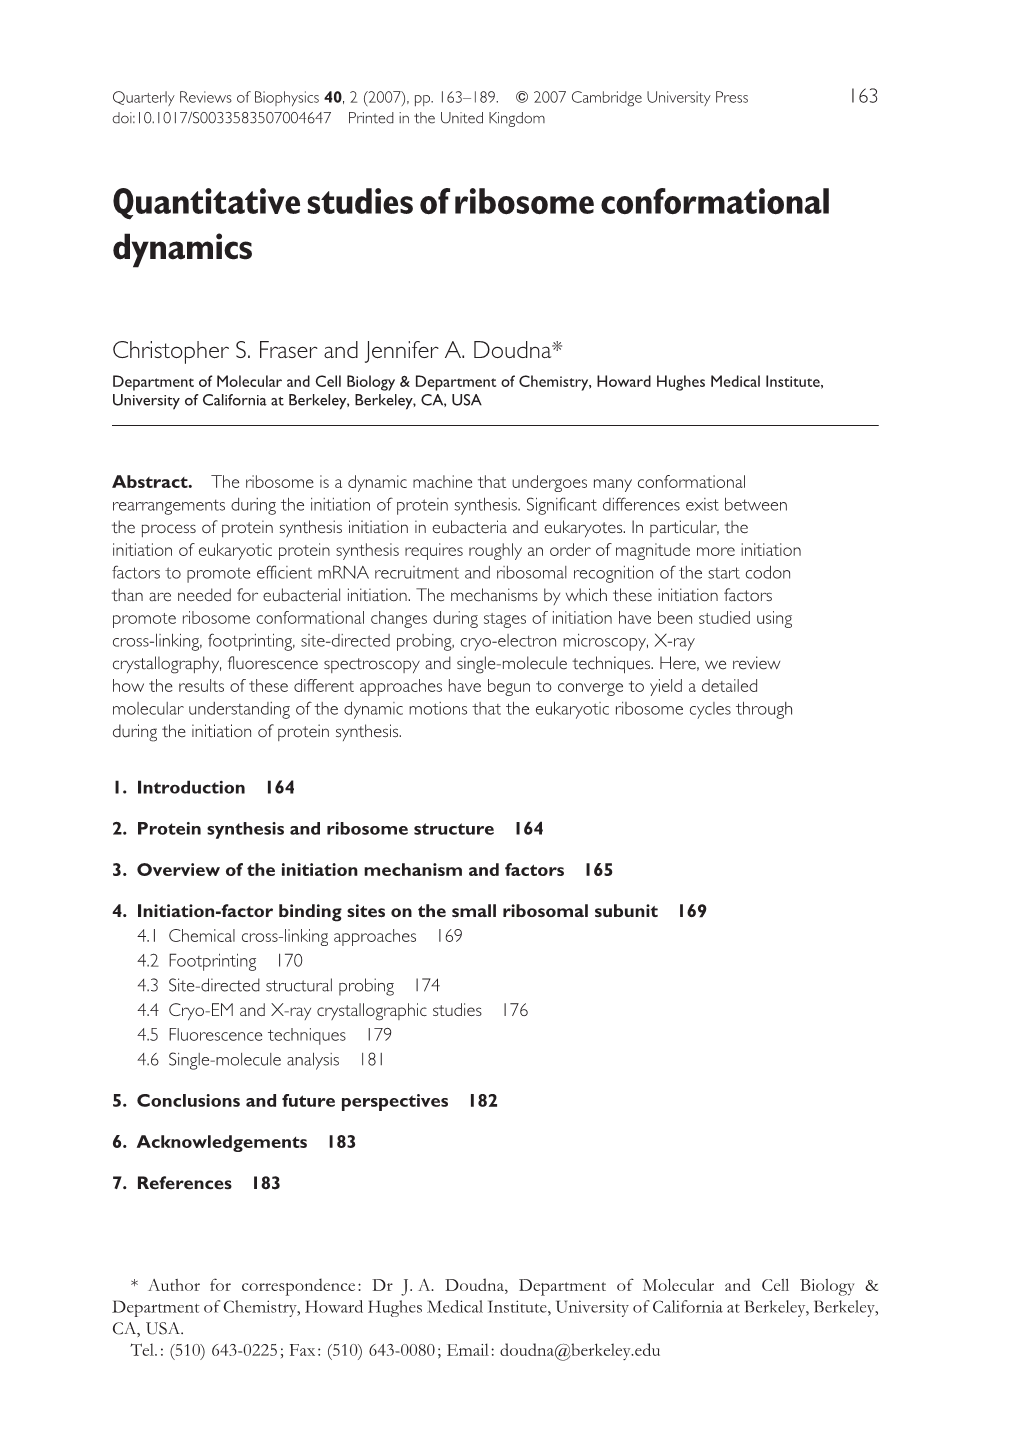 Quantitative Studies of Ribosome Conformational Dynamics